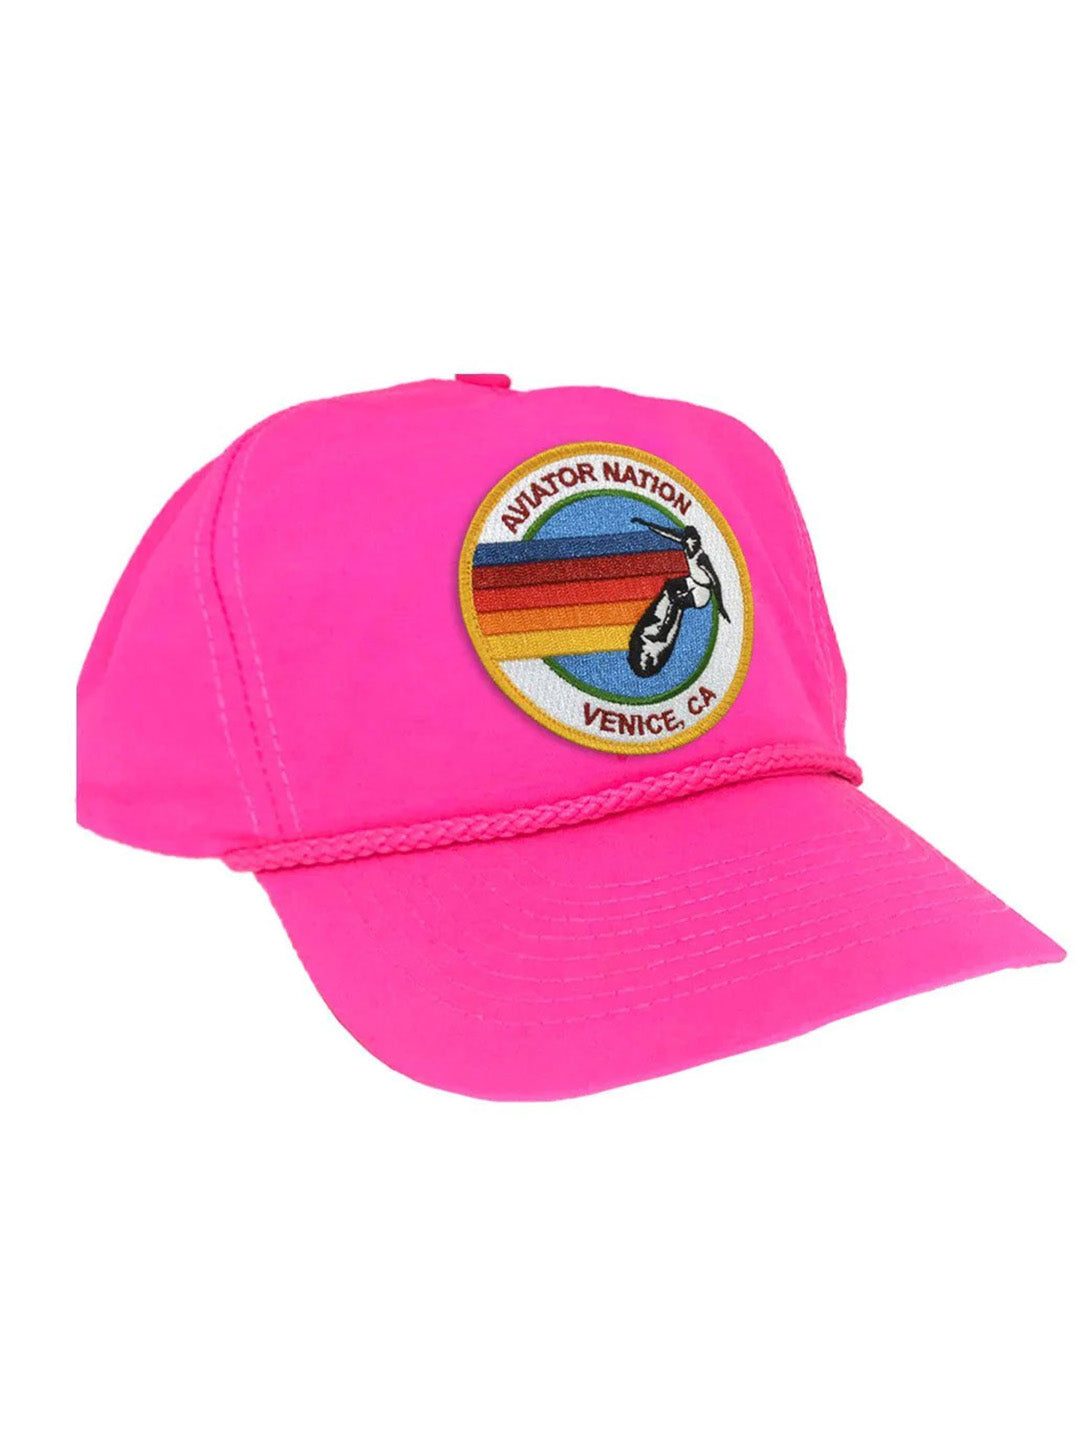 AVIATOR NATION, Signature Vintage Nylon Trucker Hat - Neon Pink